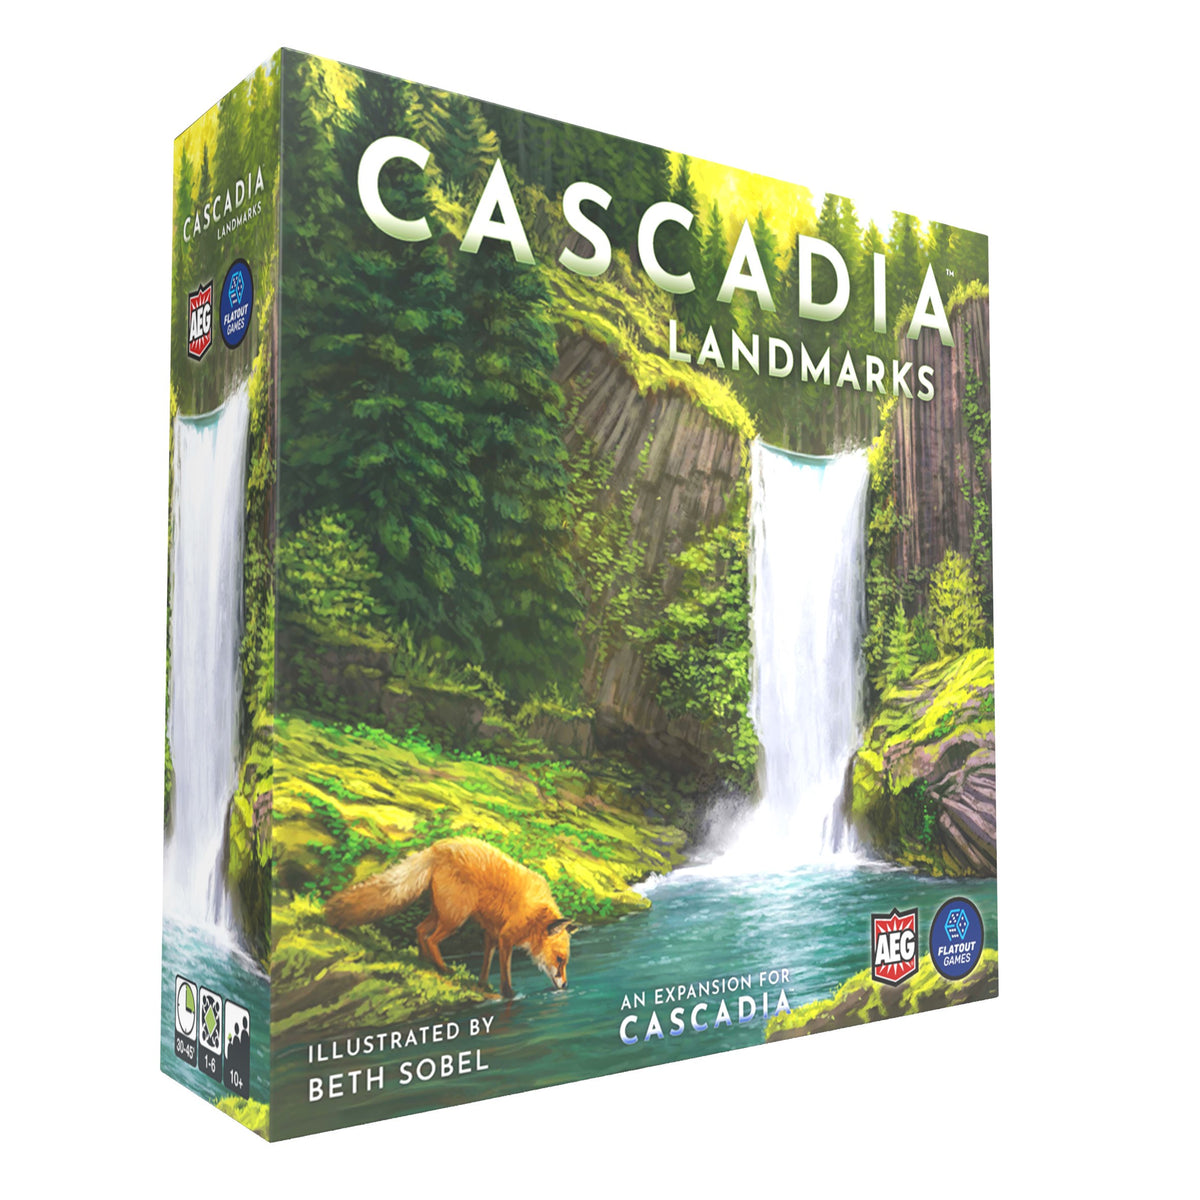 Cascadia Landmarks (Preorder)